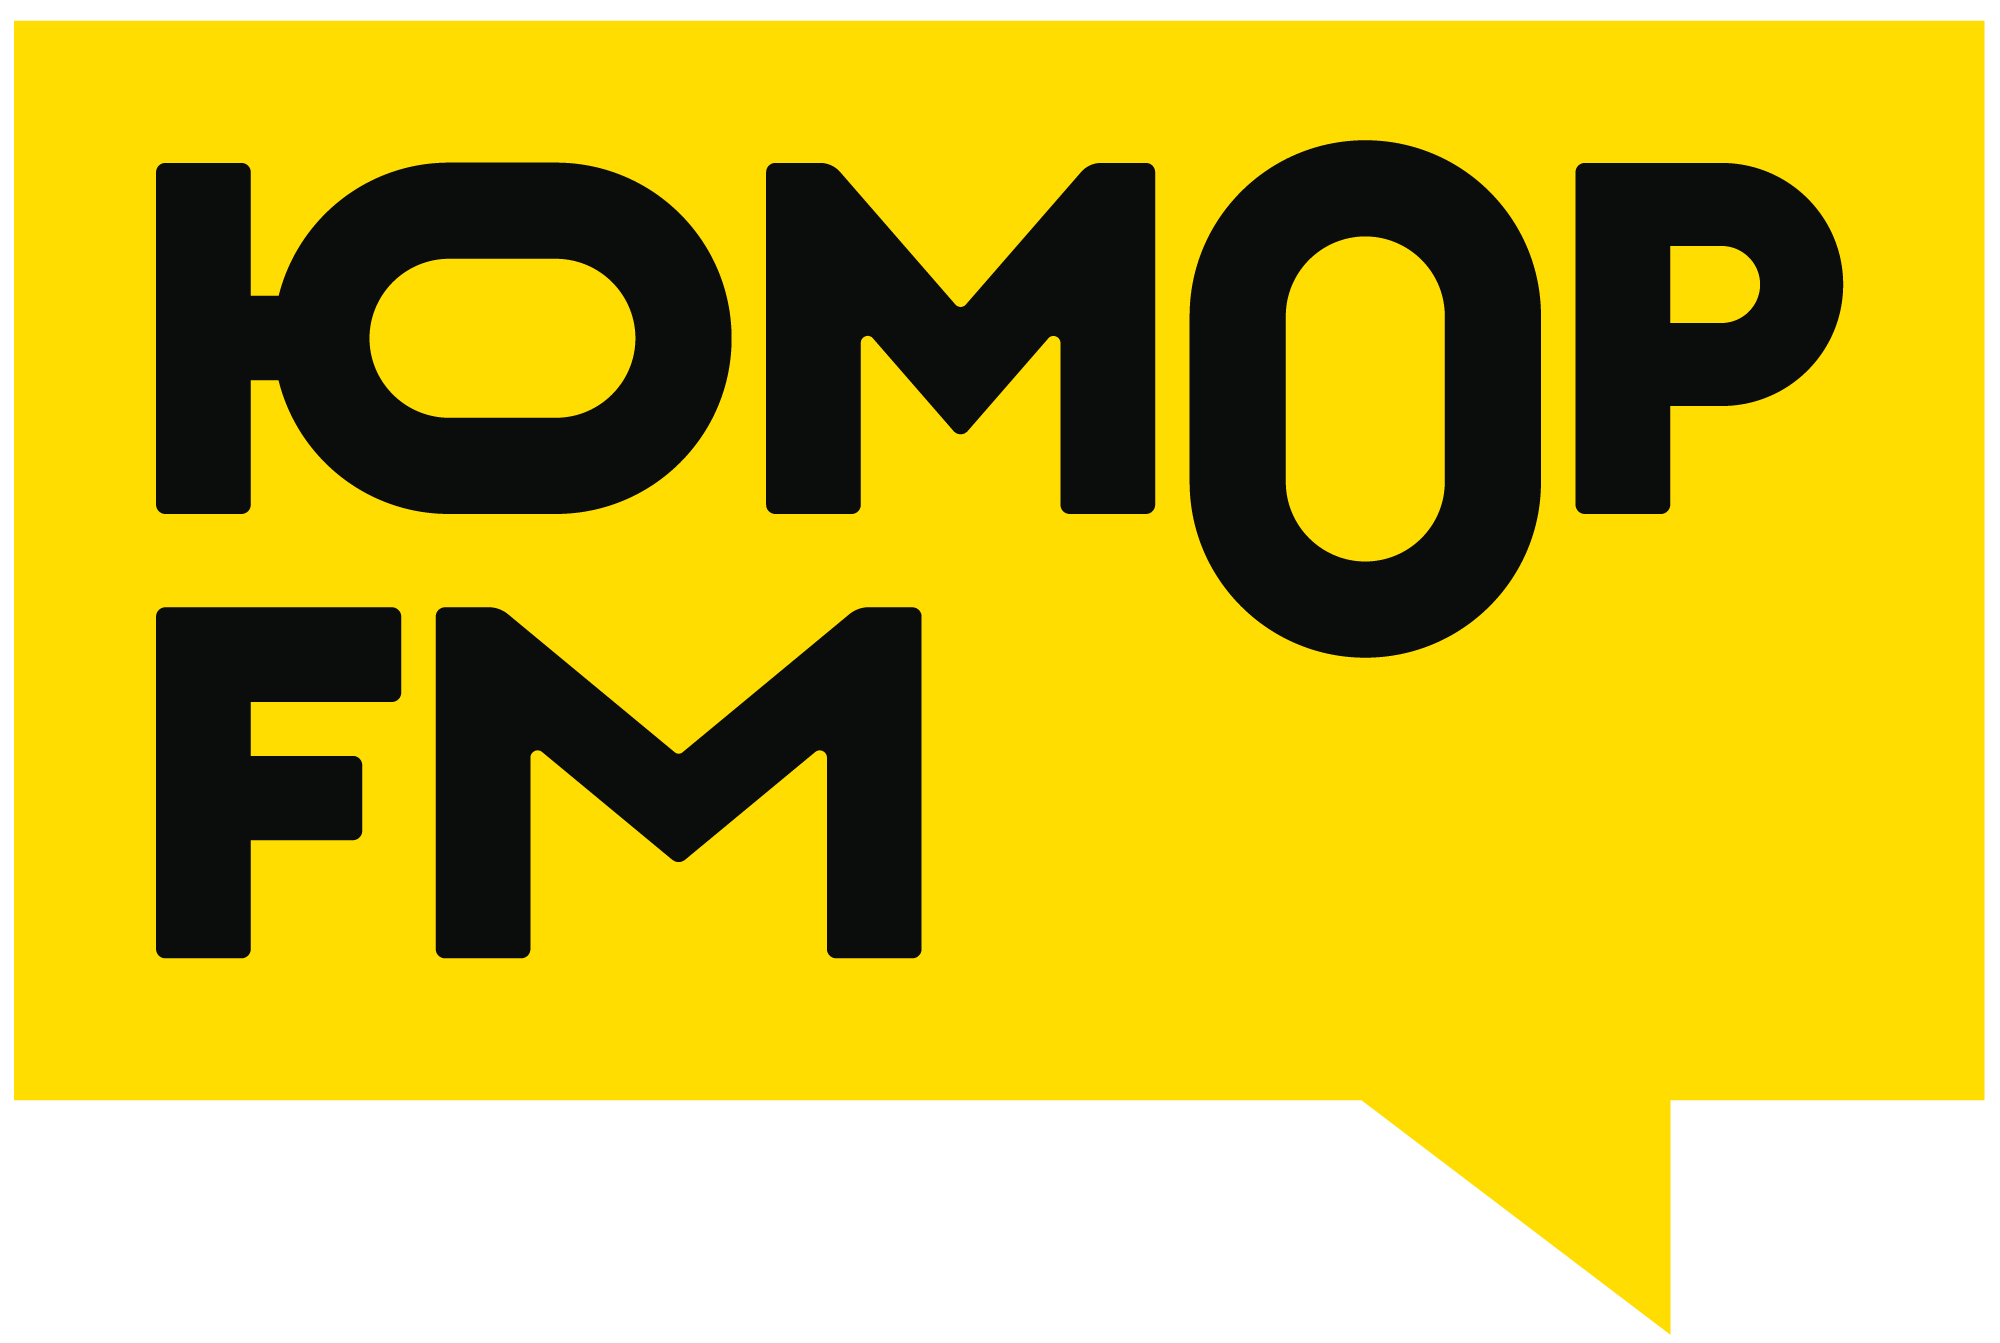 Humor logo 